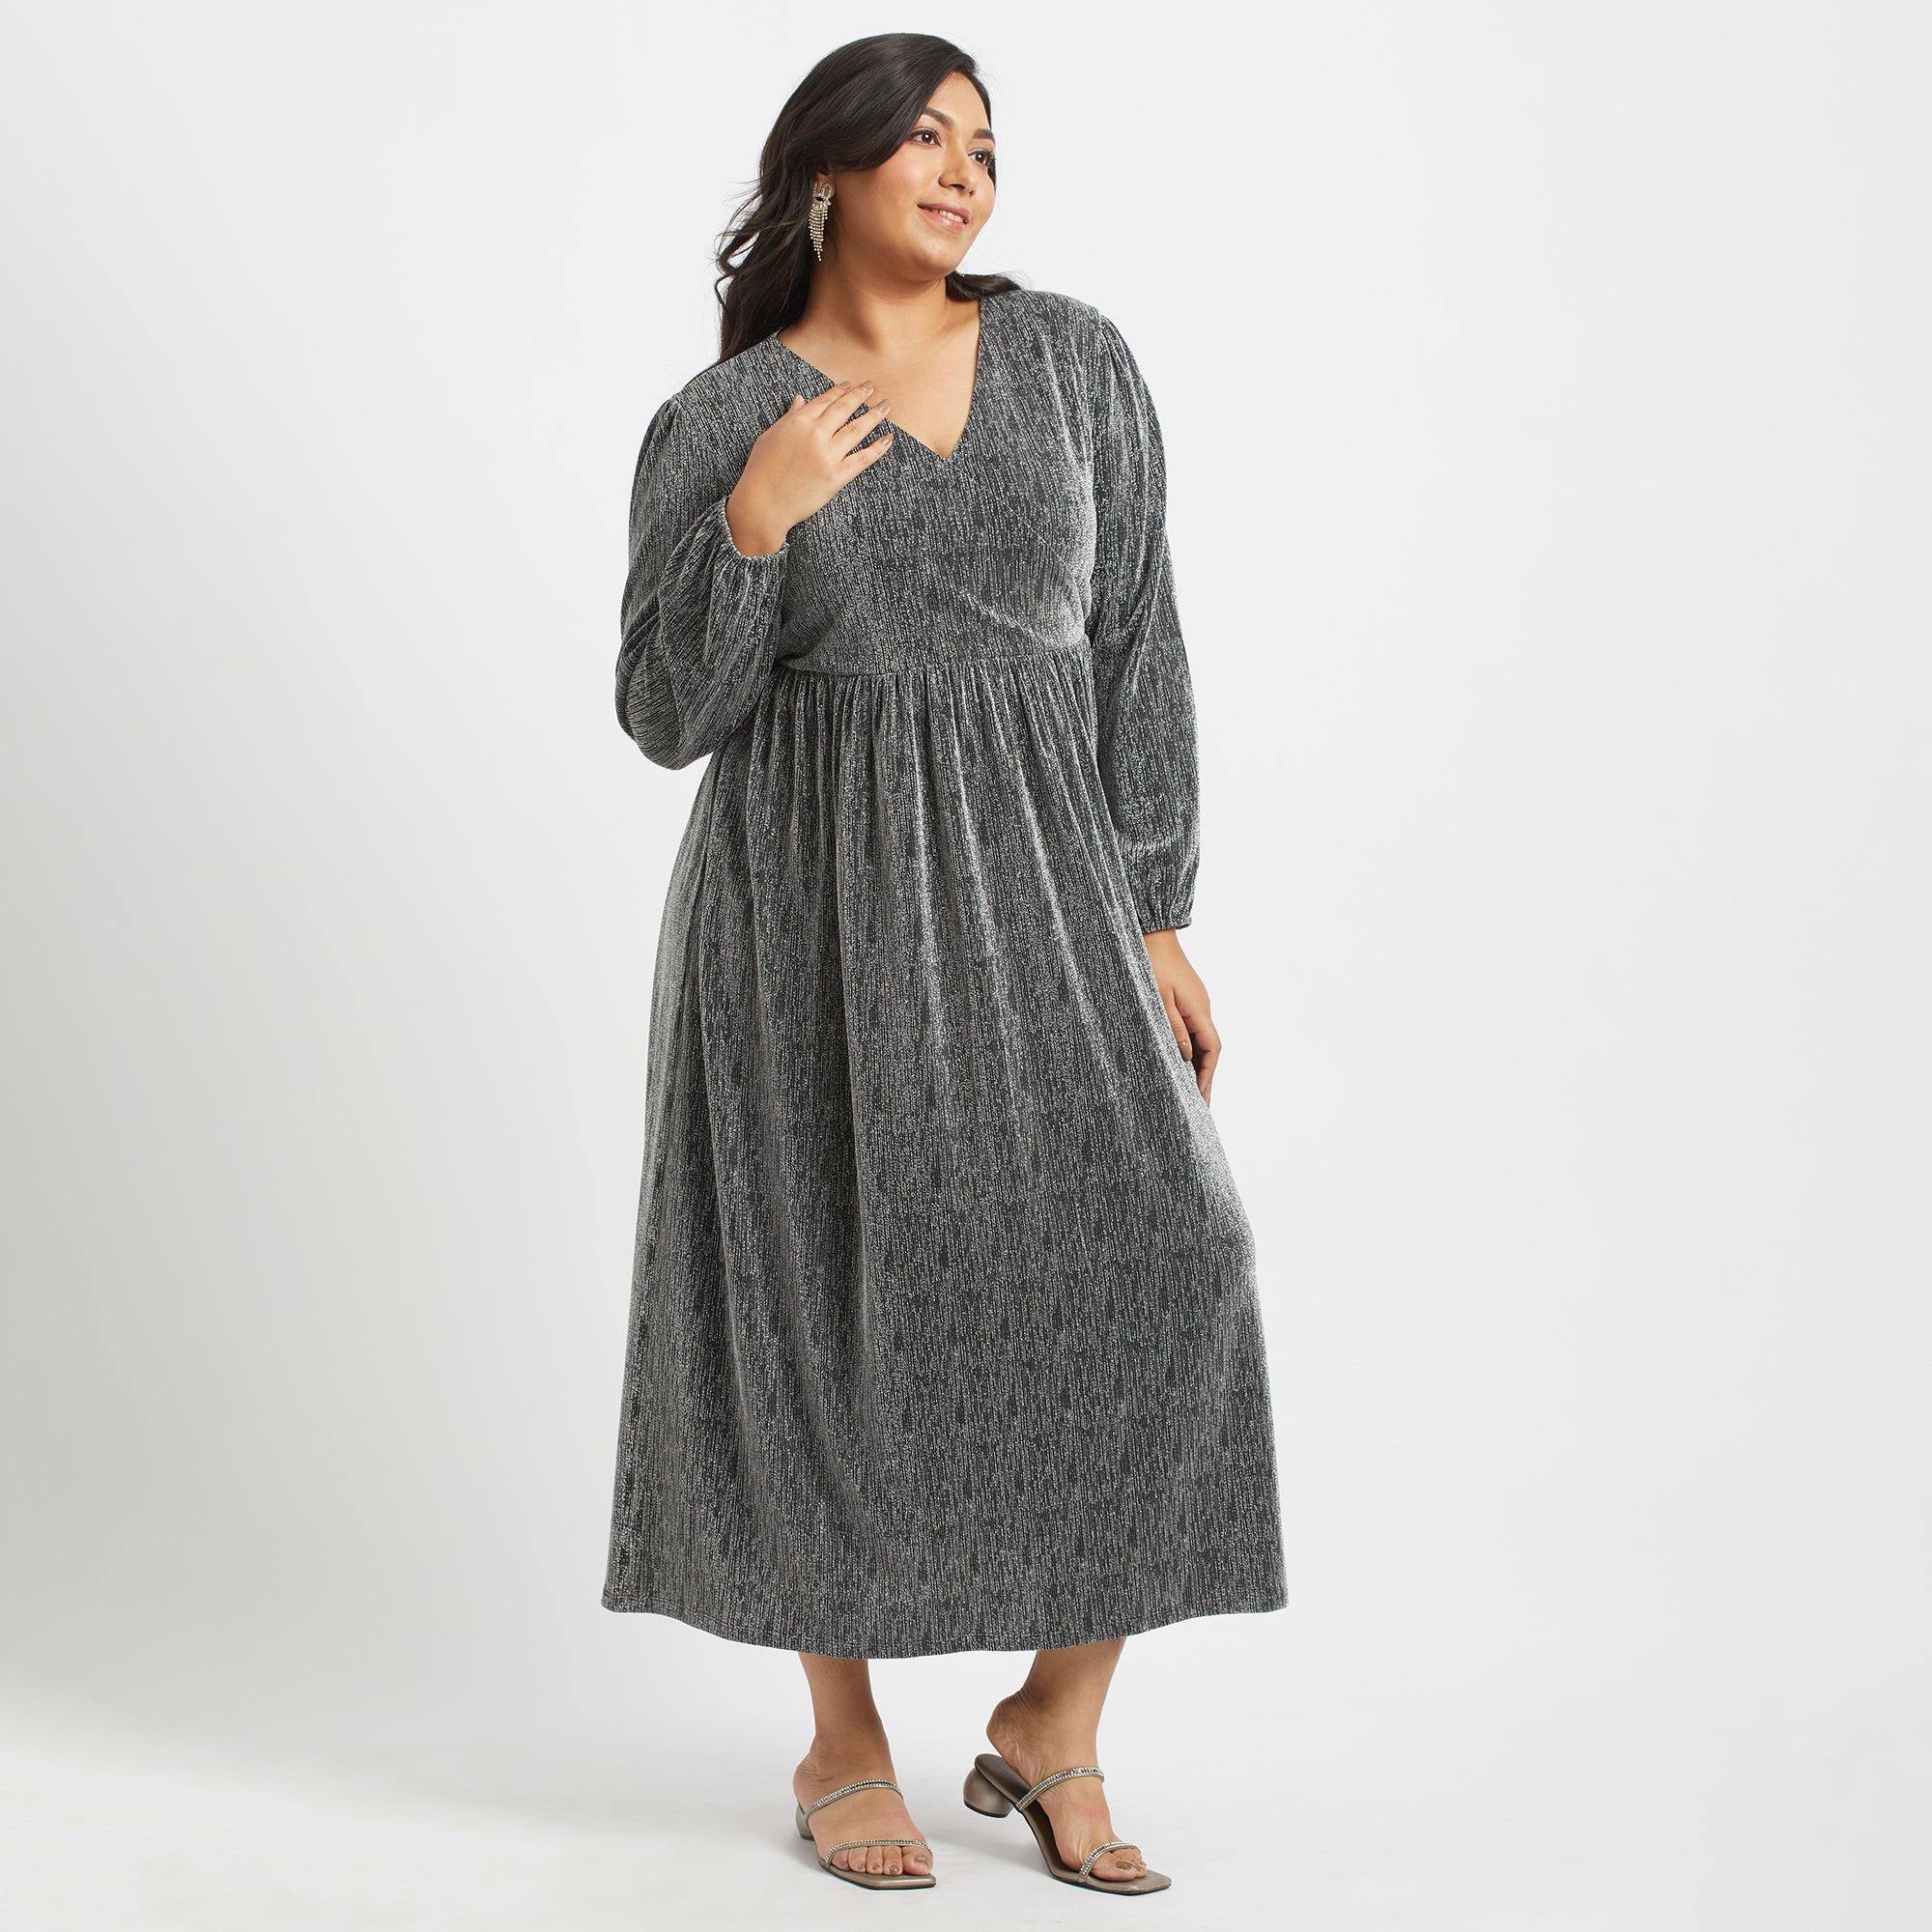 Silver Shimmer Wrap Dress For Plus Size Women